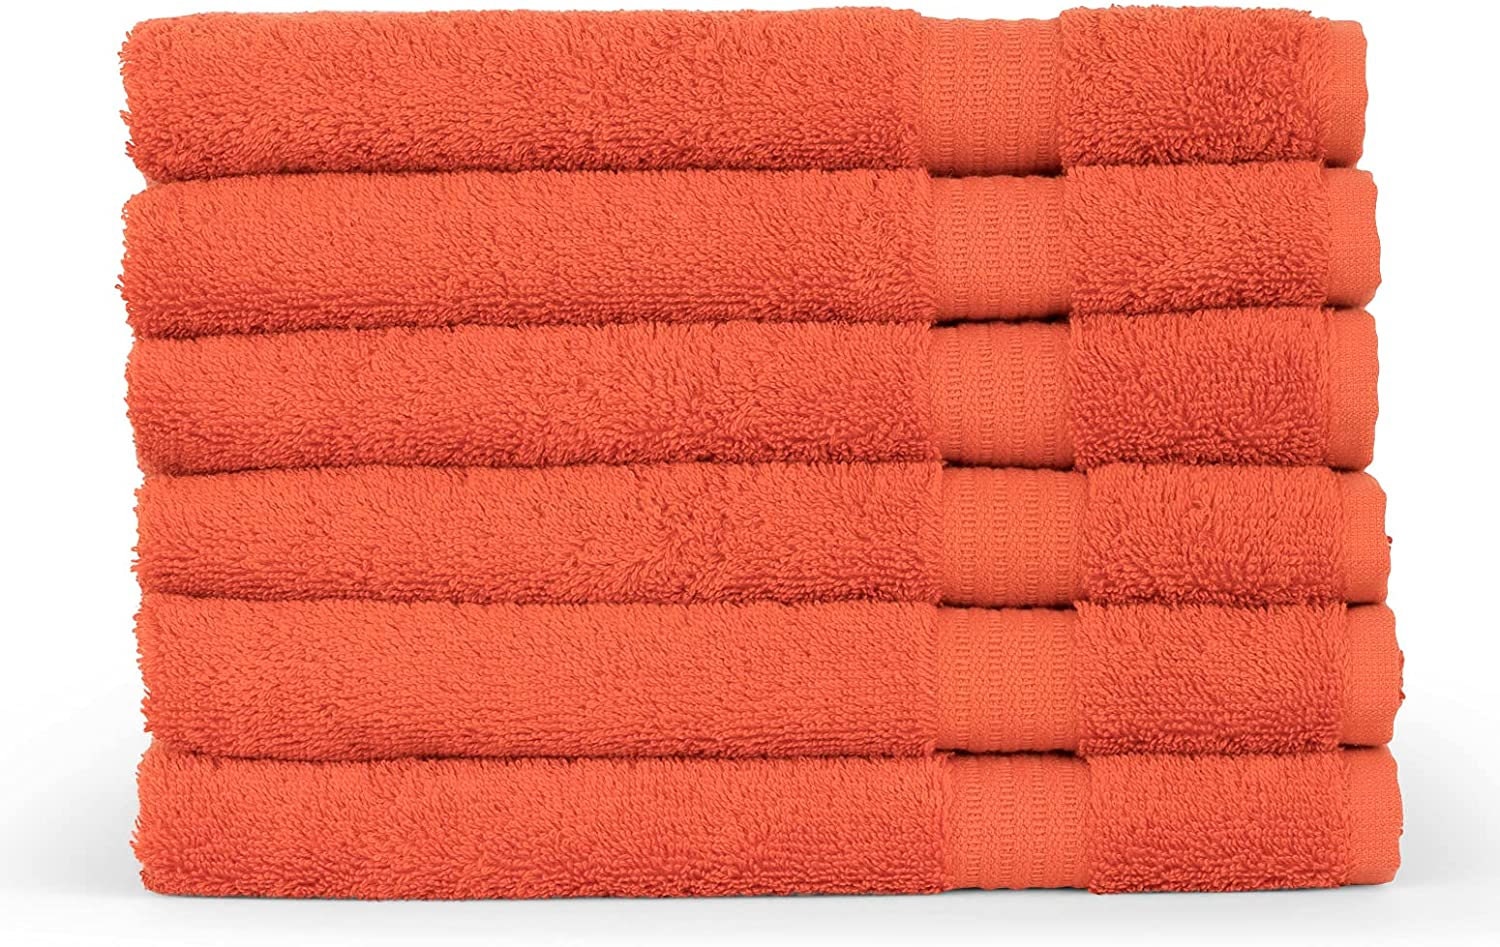 Bath Sheets Towels 27x55 Inch Plush Luxury Extra Large Bath Towels